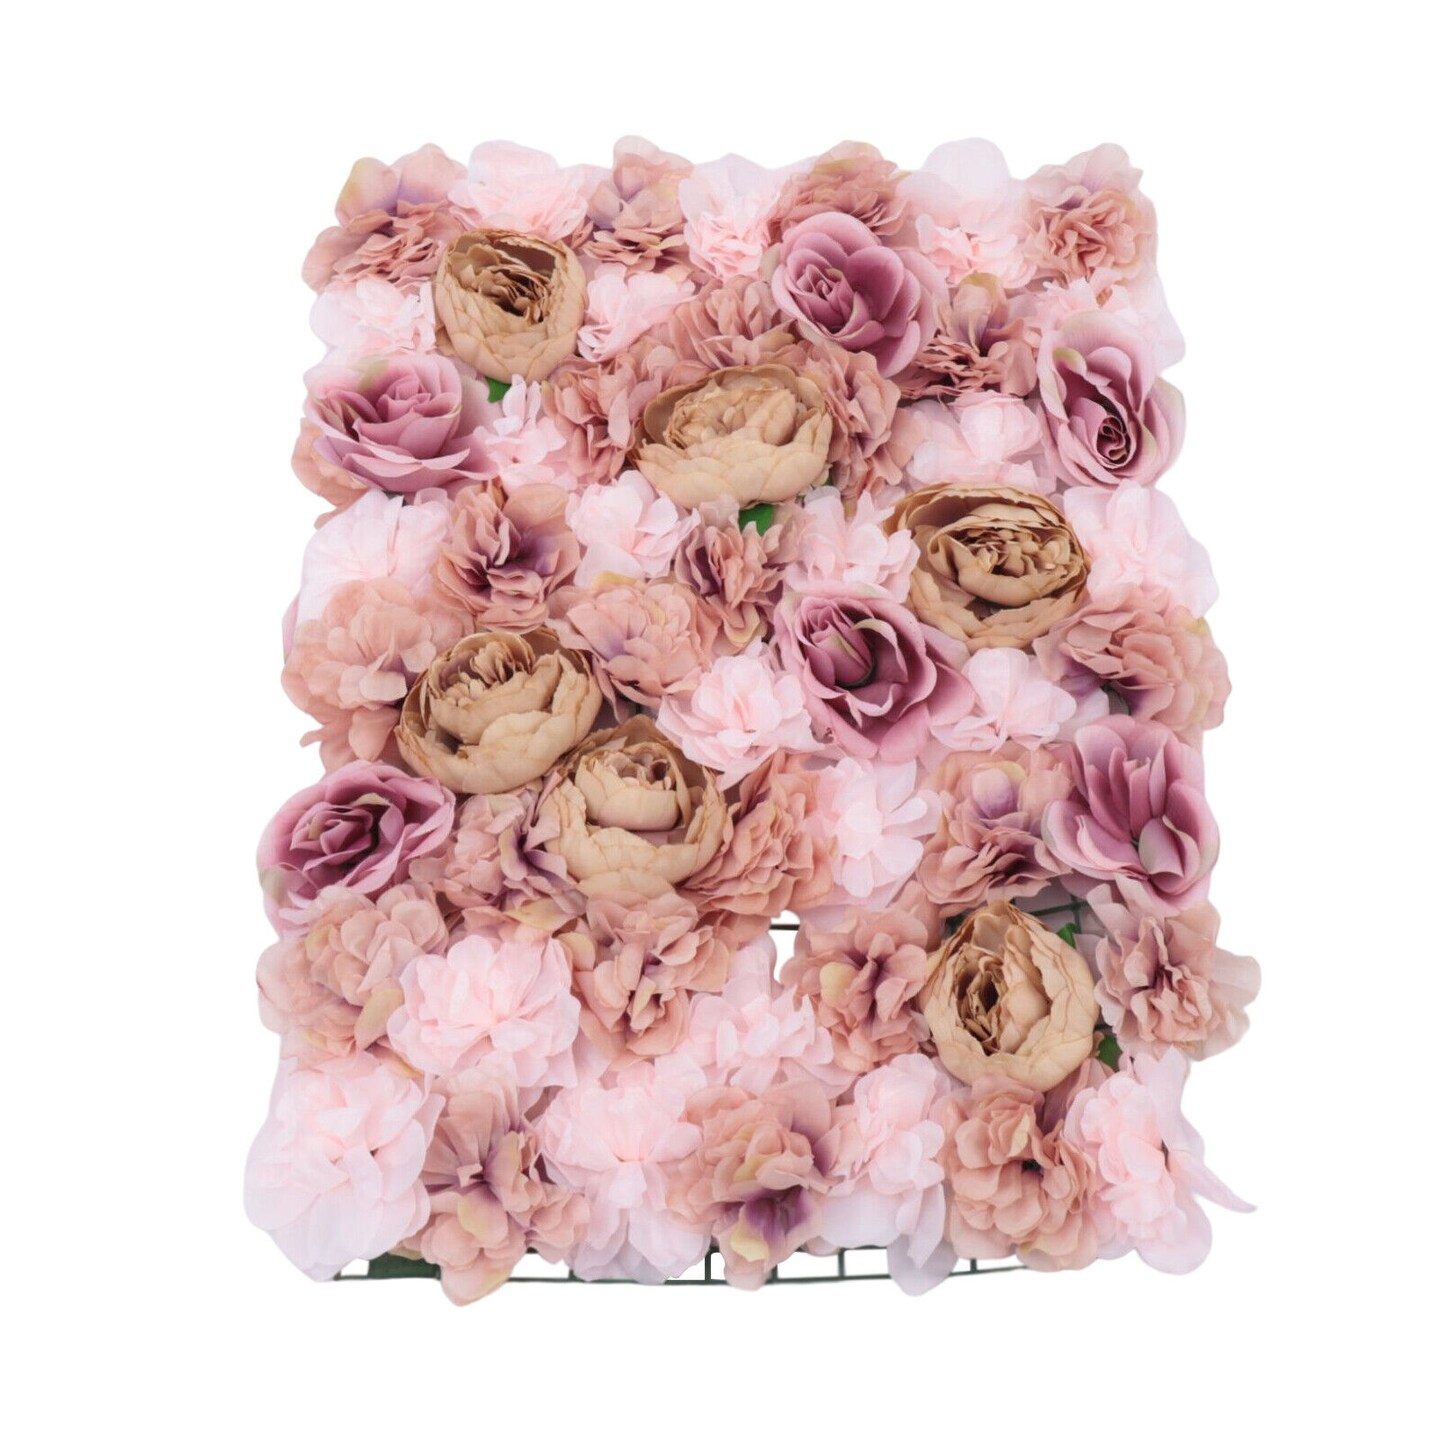 Kitcheniva 6 Pcs Artificial Rose Flower Wall Panel